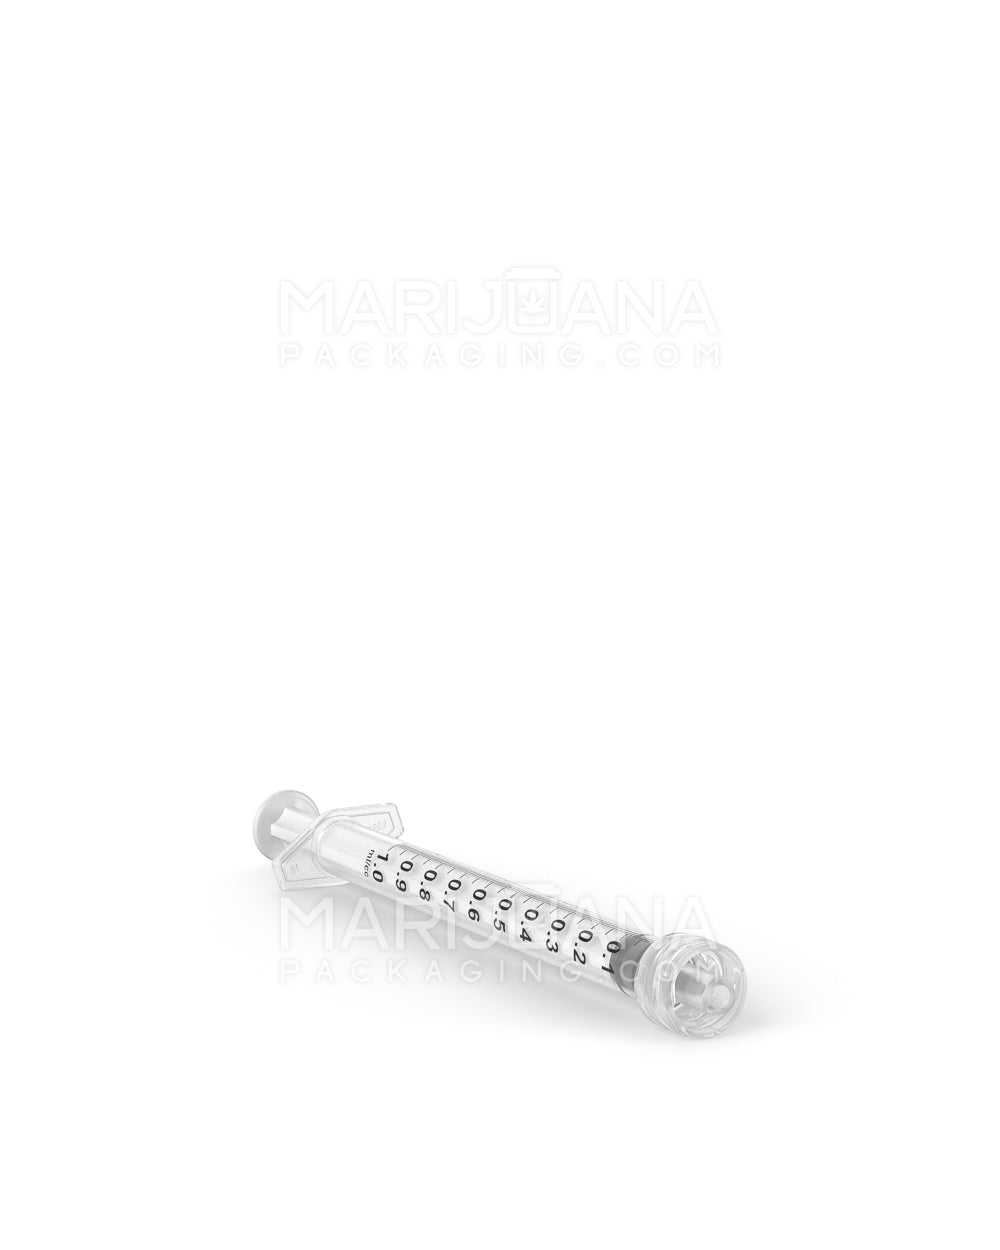 Luer Lock | Plastic Dab Applicator Syringes | 1mL - 0.1mL Increments - 100 Count - 4